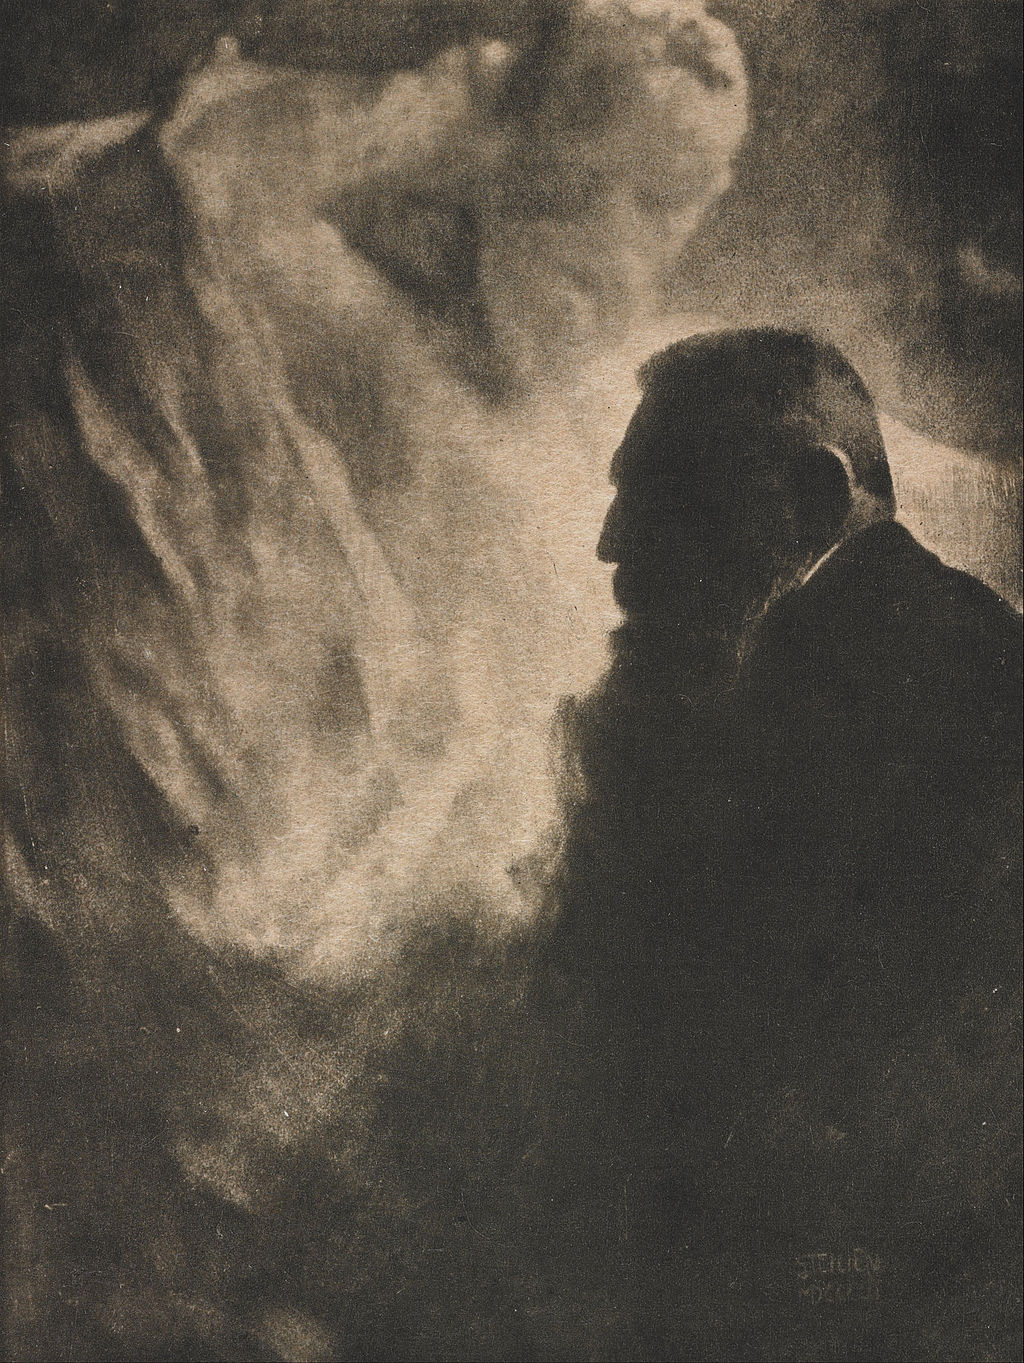 Edward Steichen, Portrait of Rodin, 1900/1903